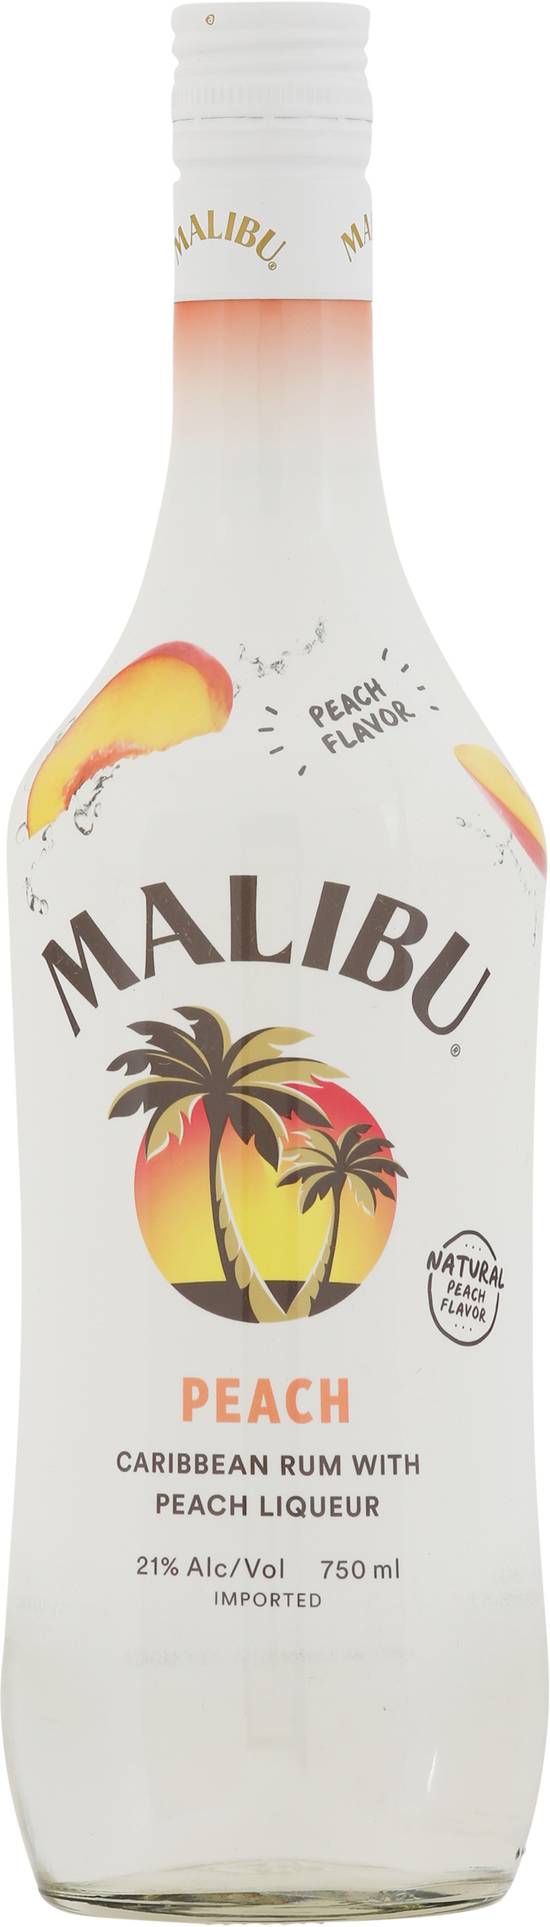 Malibu Peach Rum (750ml bottle)